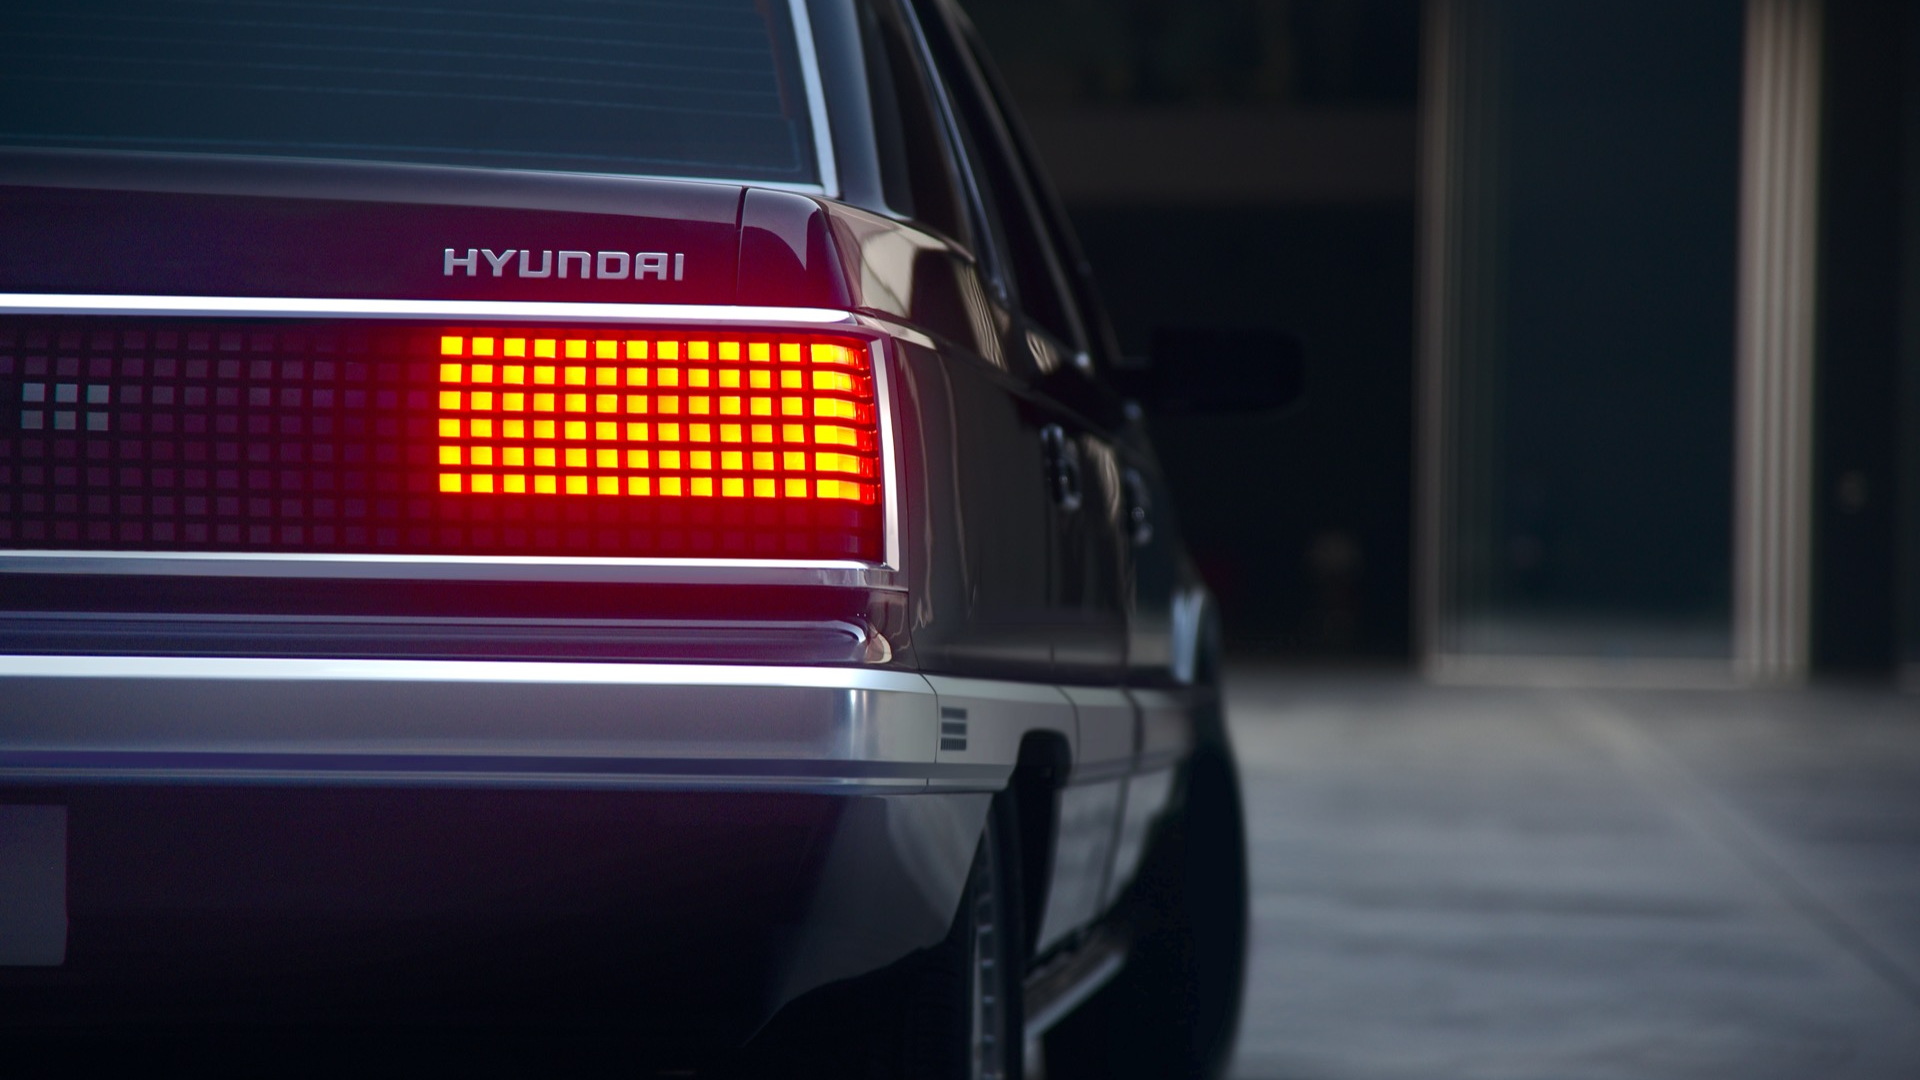 Hyundai Grandeur Heritage Series concept